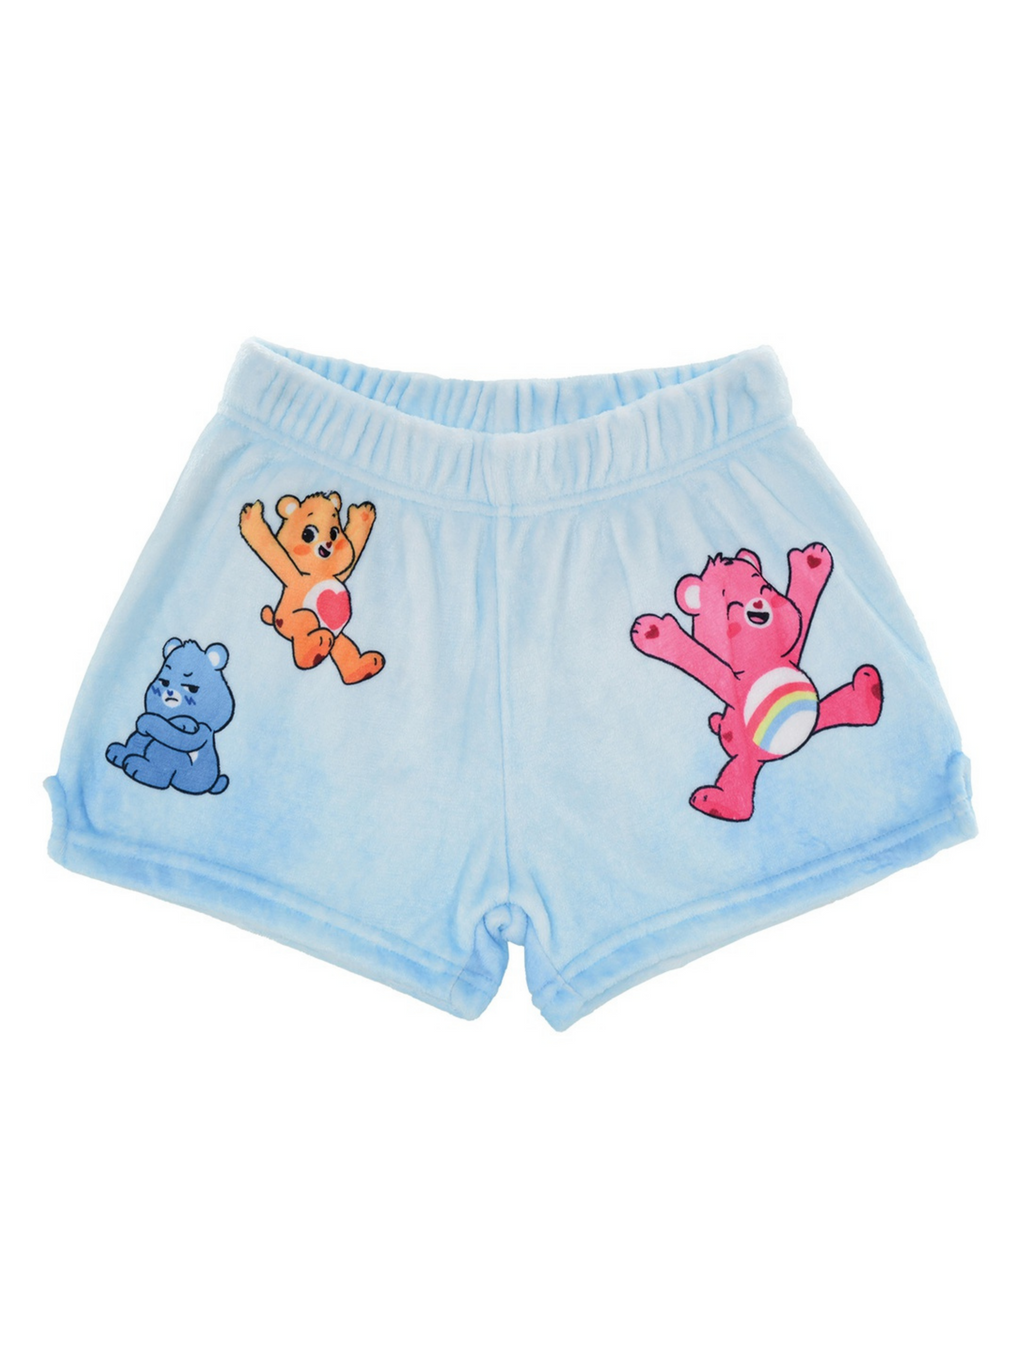 Care Bears Plush Shorts